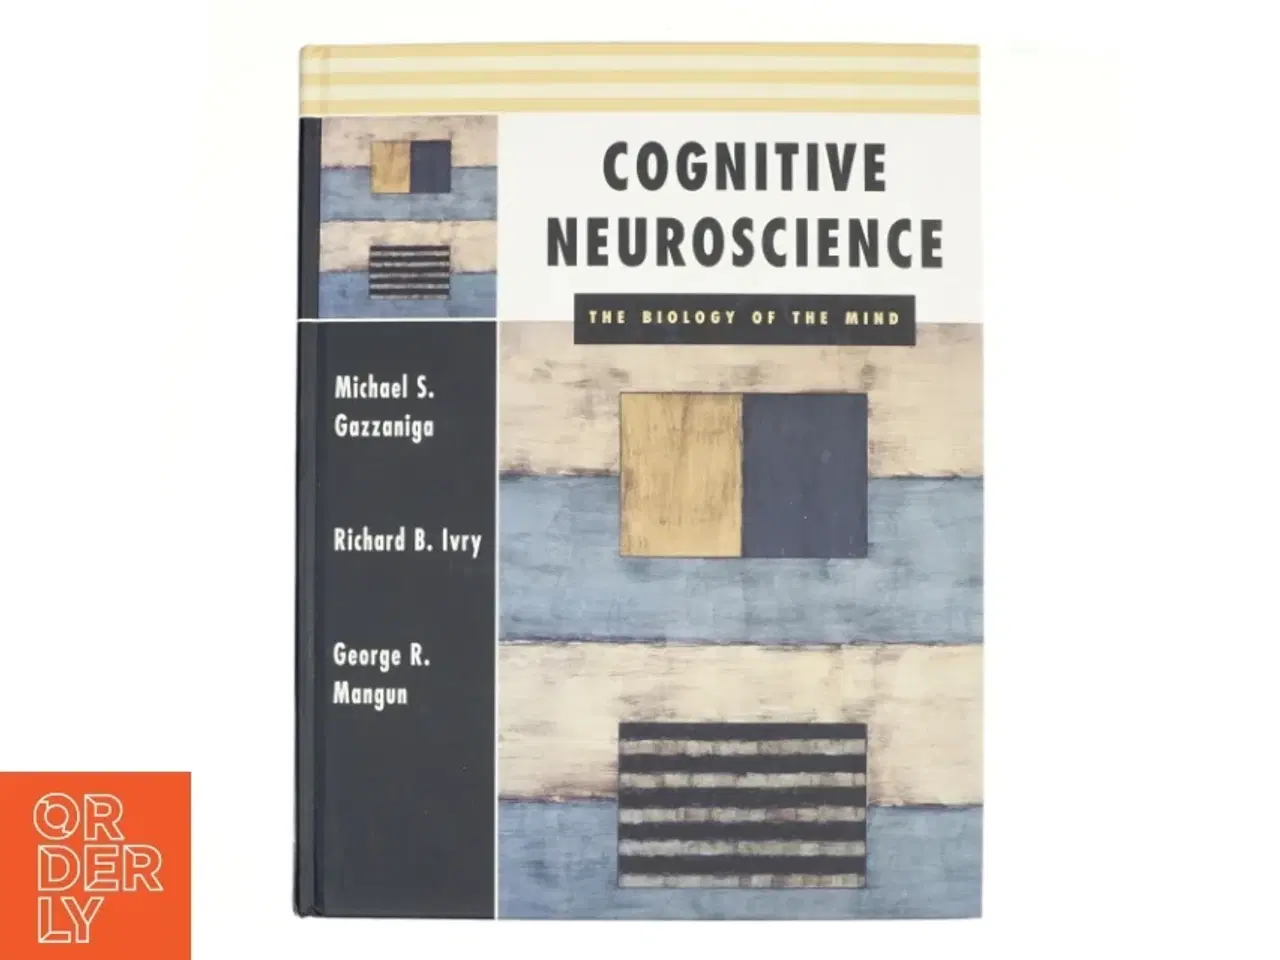 Billede 1 - Cognitive Neuroscience af Michael S. Gazzaniga, Richard B. Ivry, George Ronald Mangun (Bog)